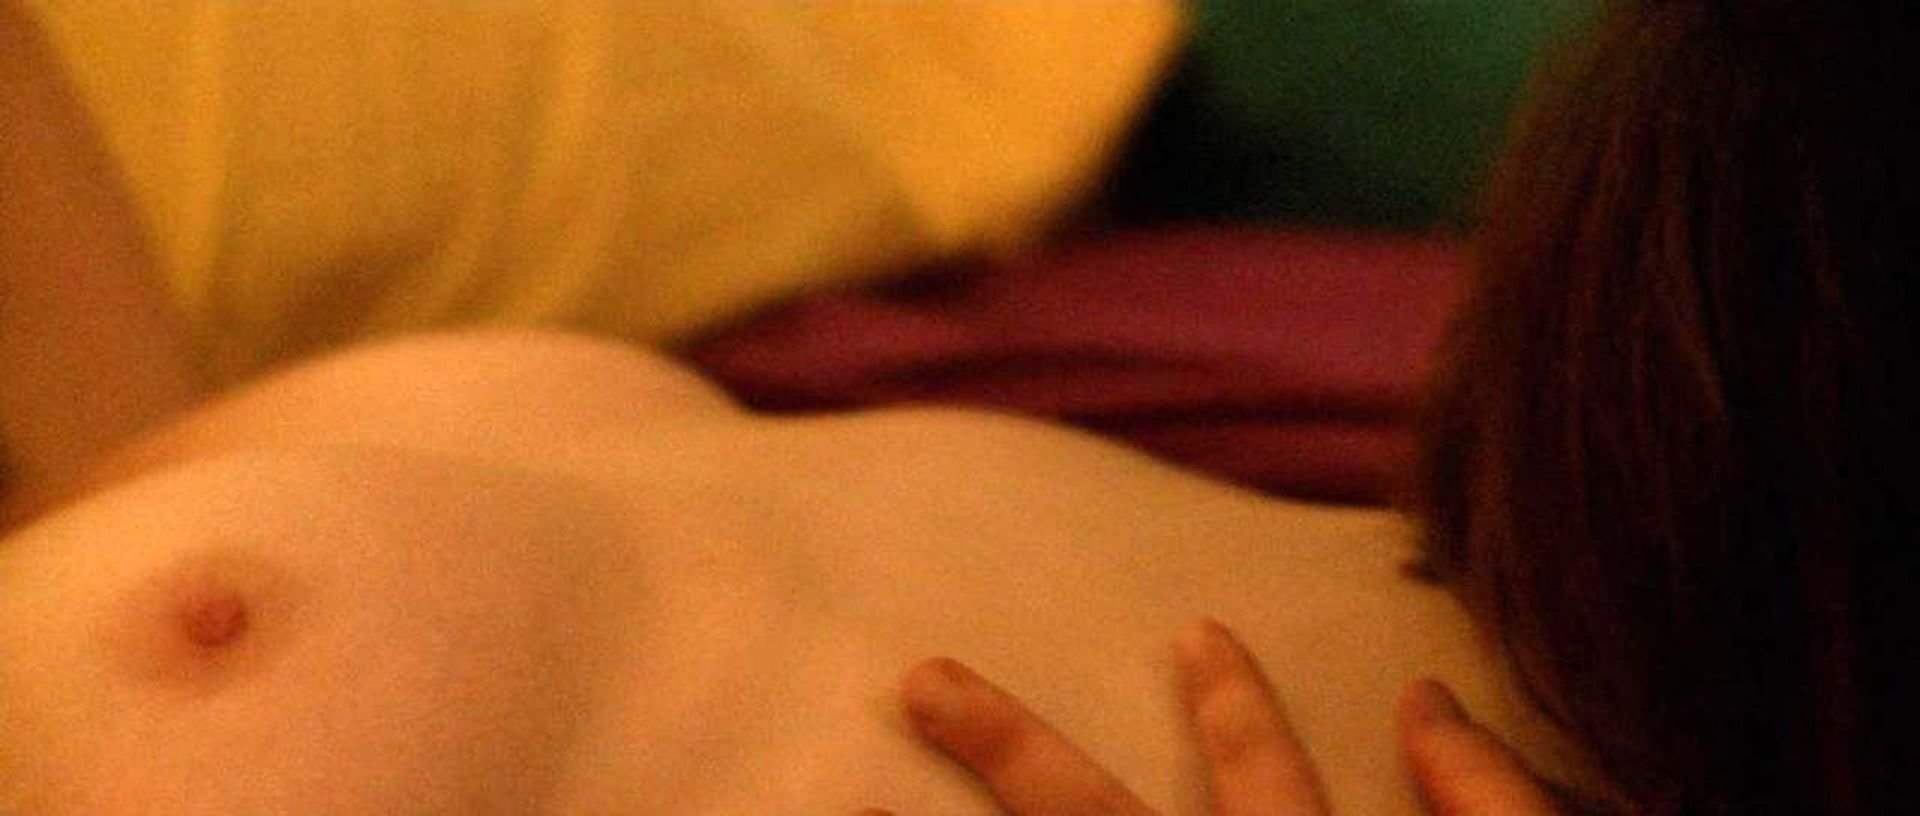 Watch Cat Smits and Heidi M. Sallows nude lesbian sex scene from 'Bumb...